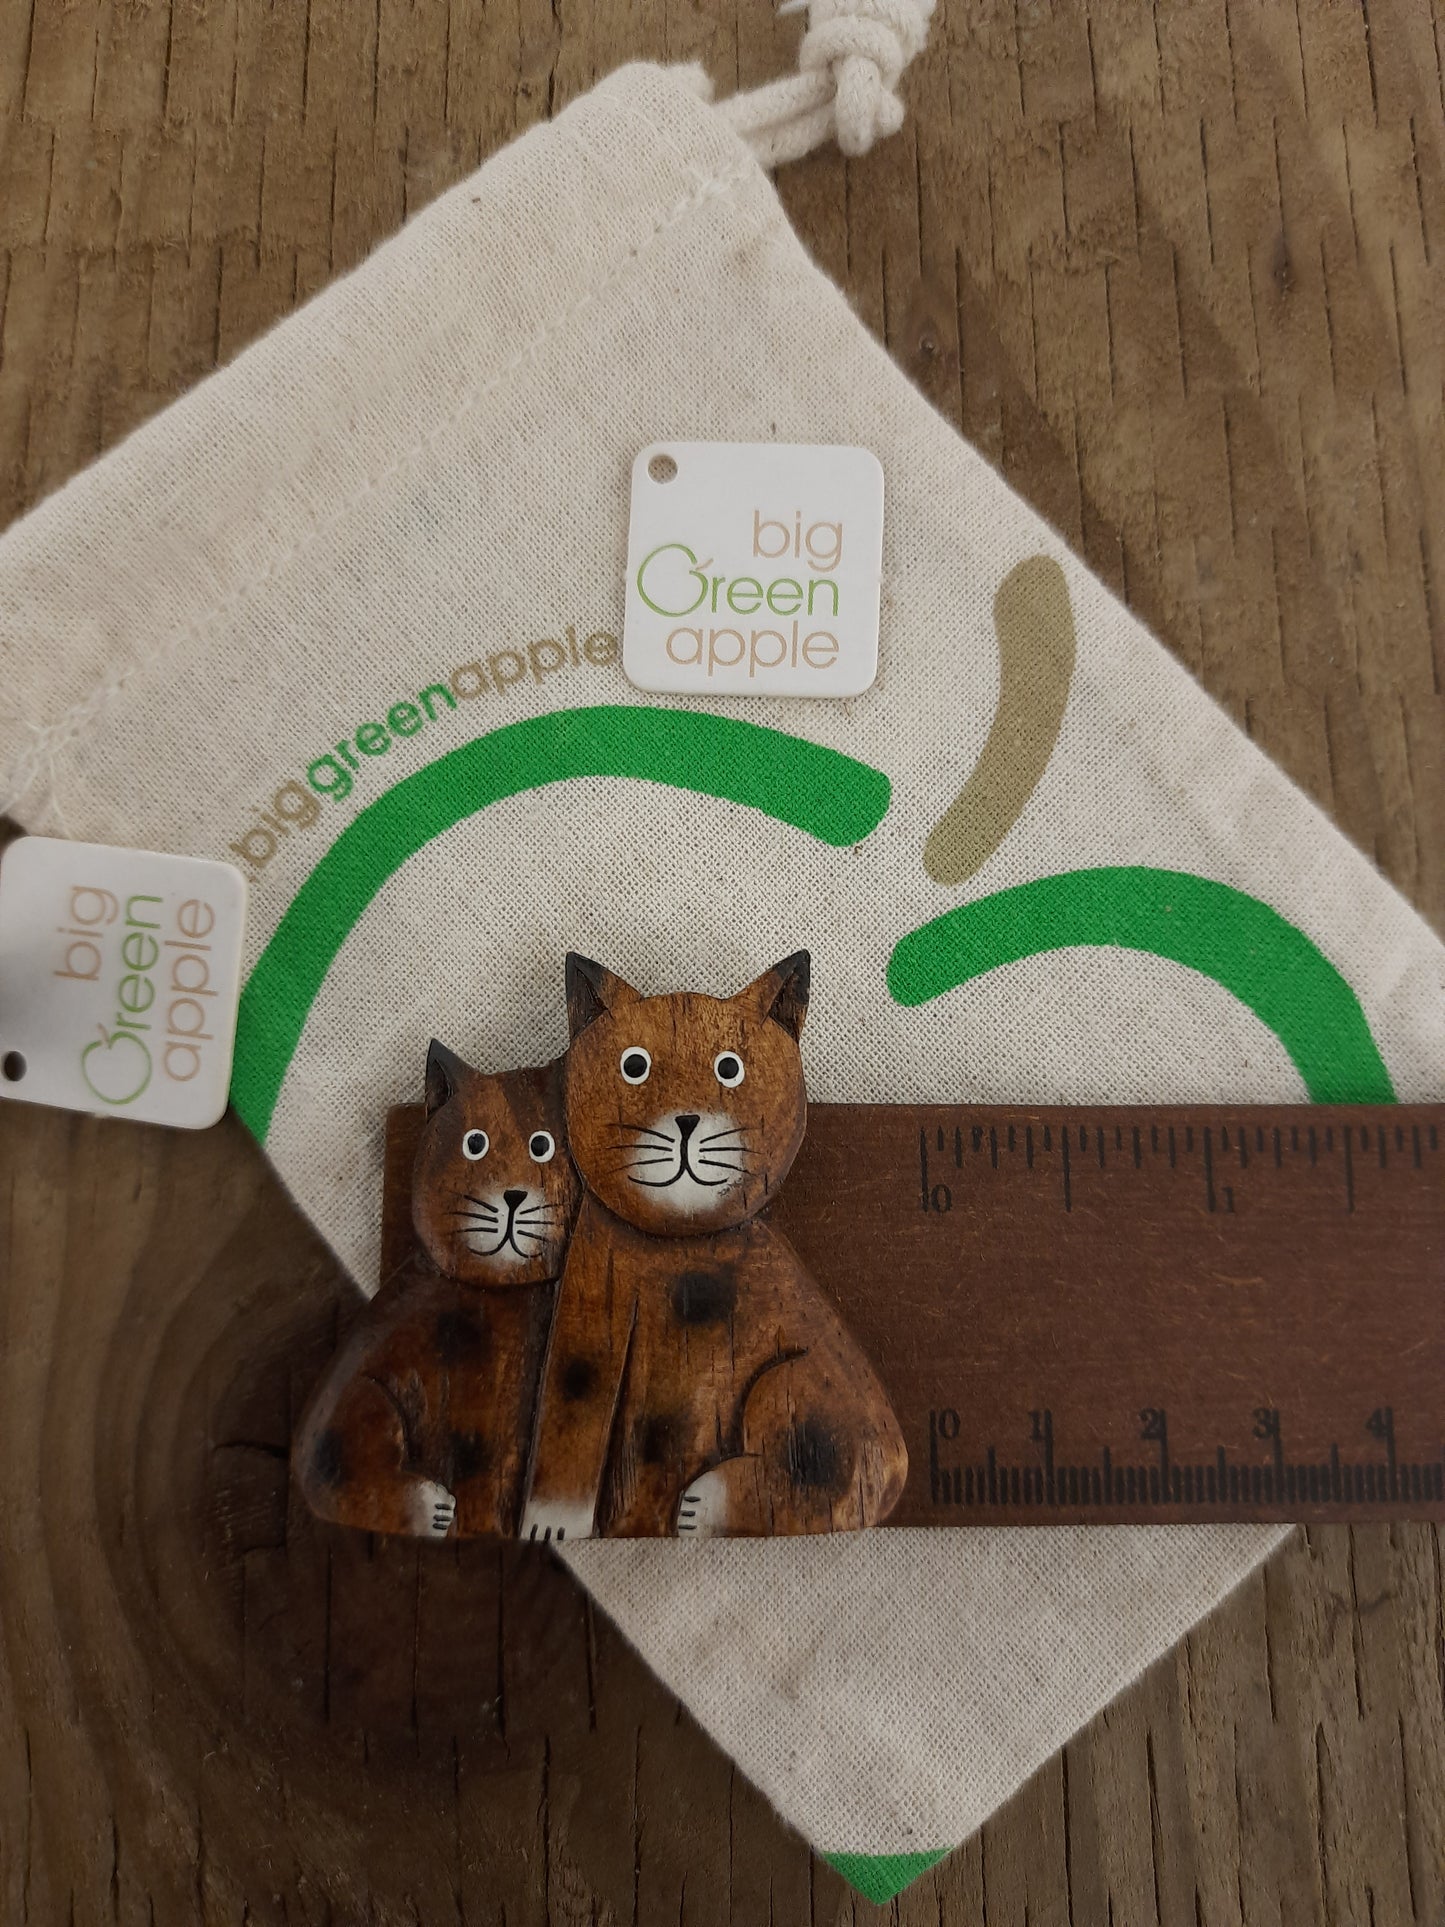 eco friendly gift ideas, wooden cat ruler, fair trade online shop, big green apple